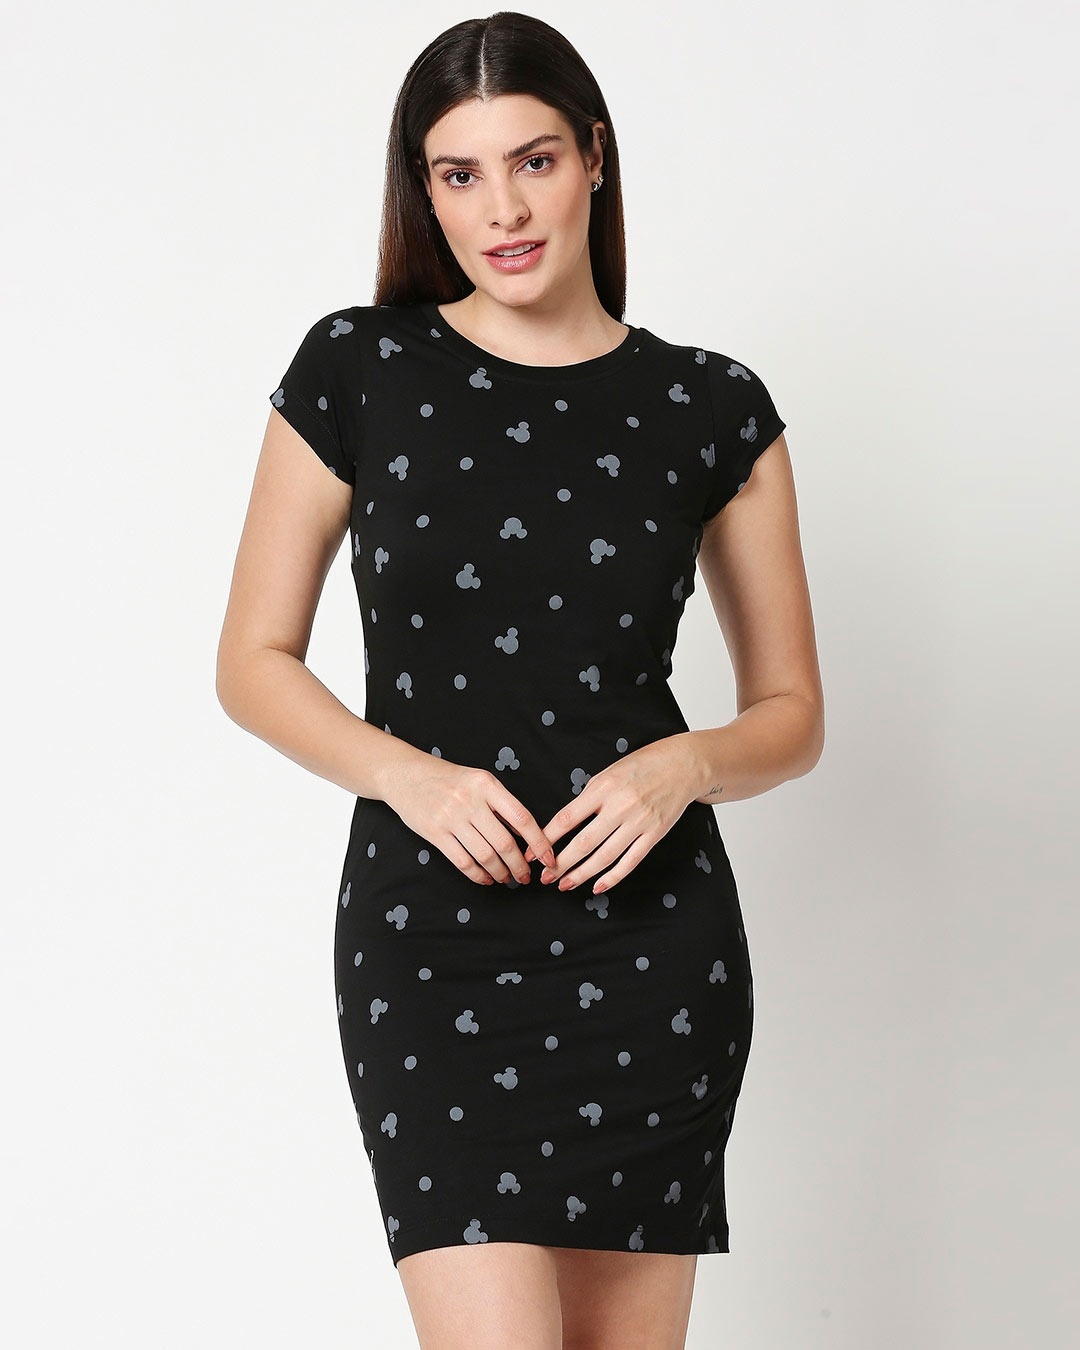 Shop Mickey silhouette AOP Dress(DL)-Back